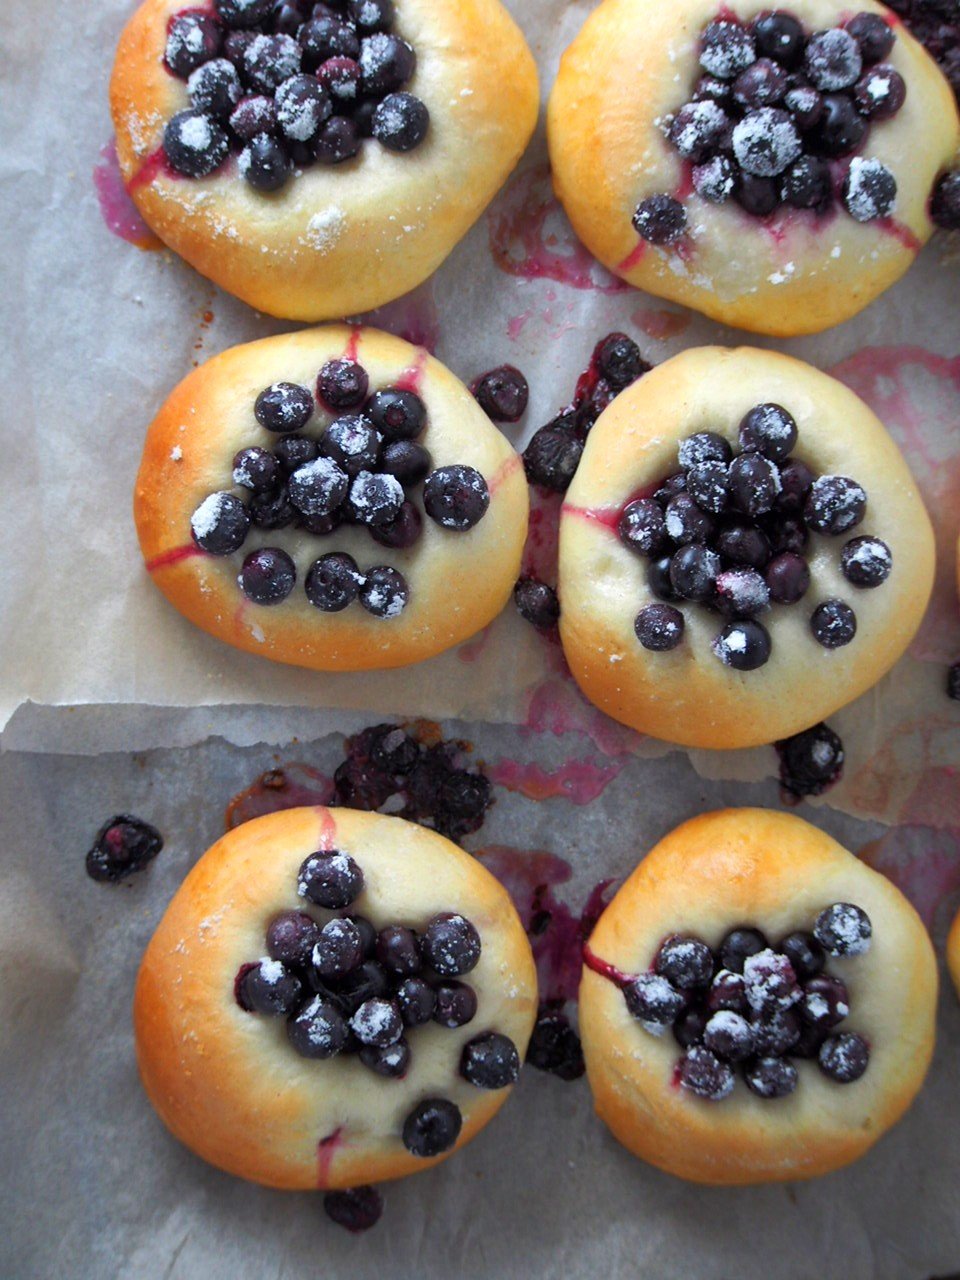 Top shot of Finnish Blueberry buns.